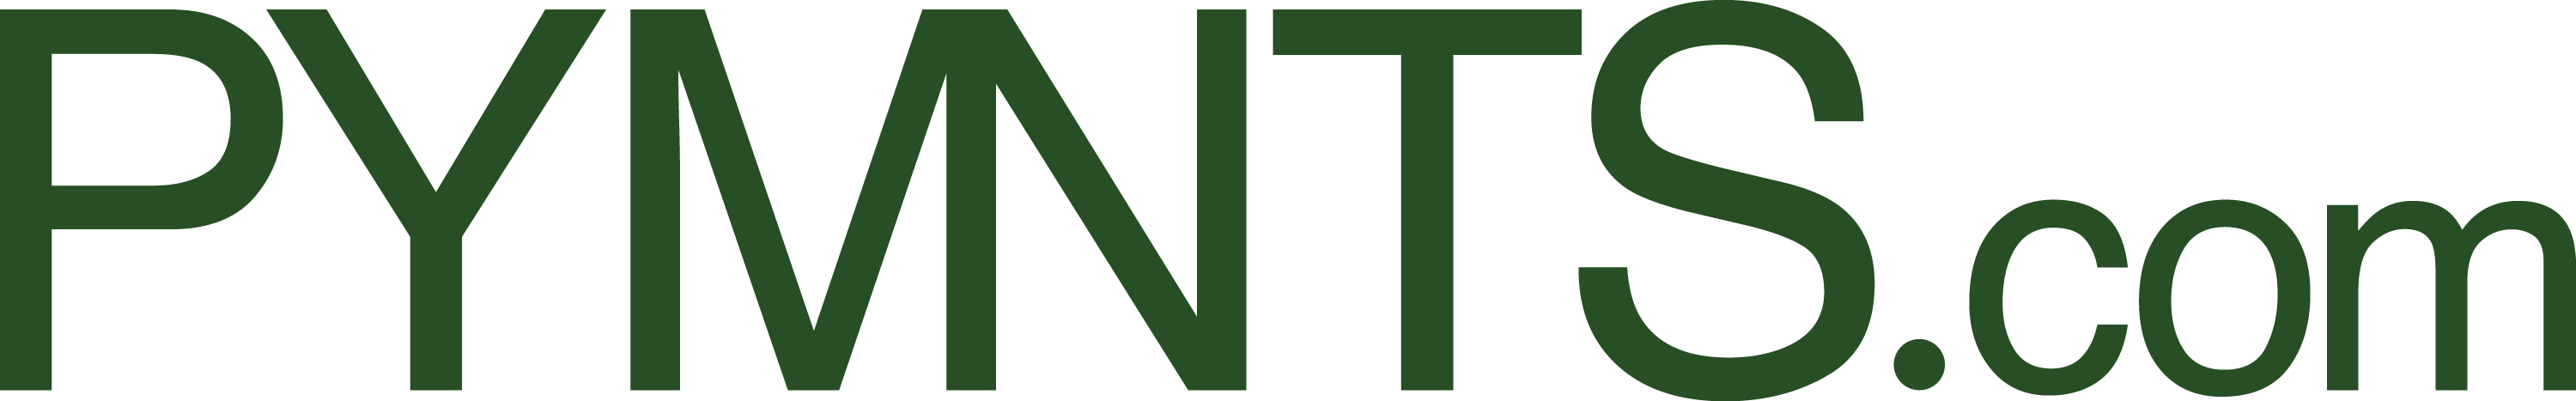 PYMNTS-logo-green